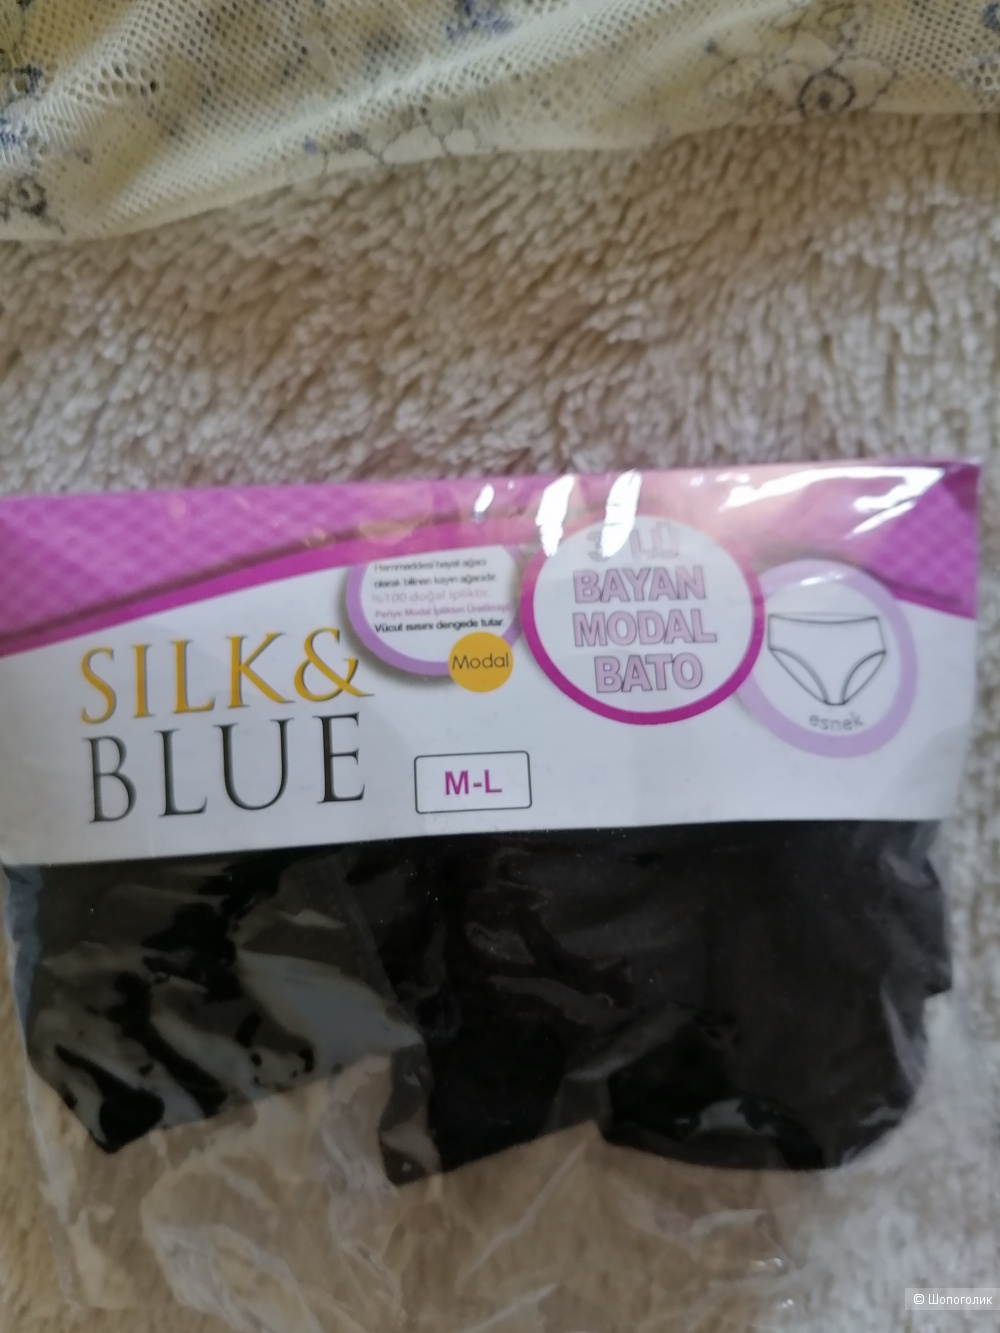 Комплект трусов Silk & blue, размер S, M.